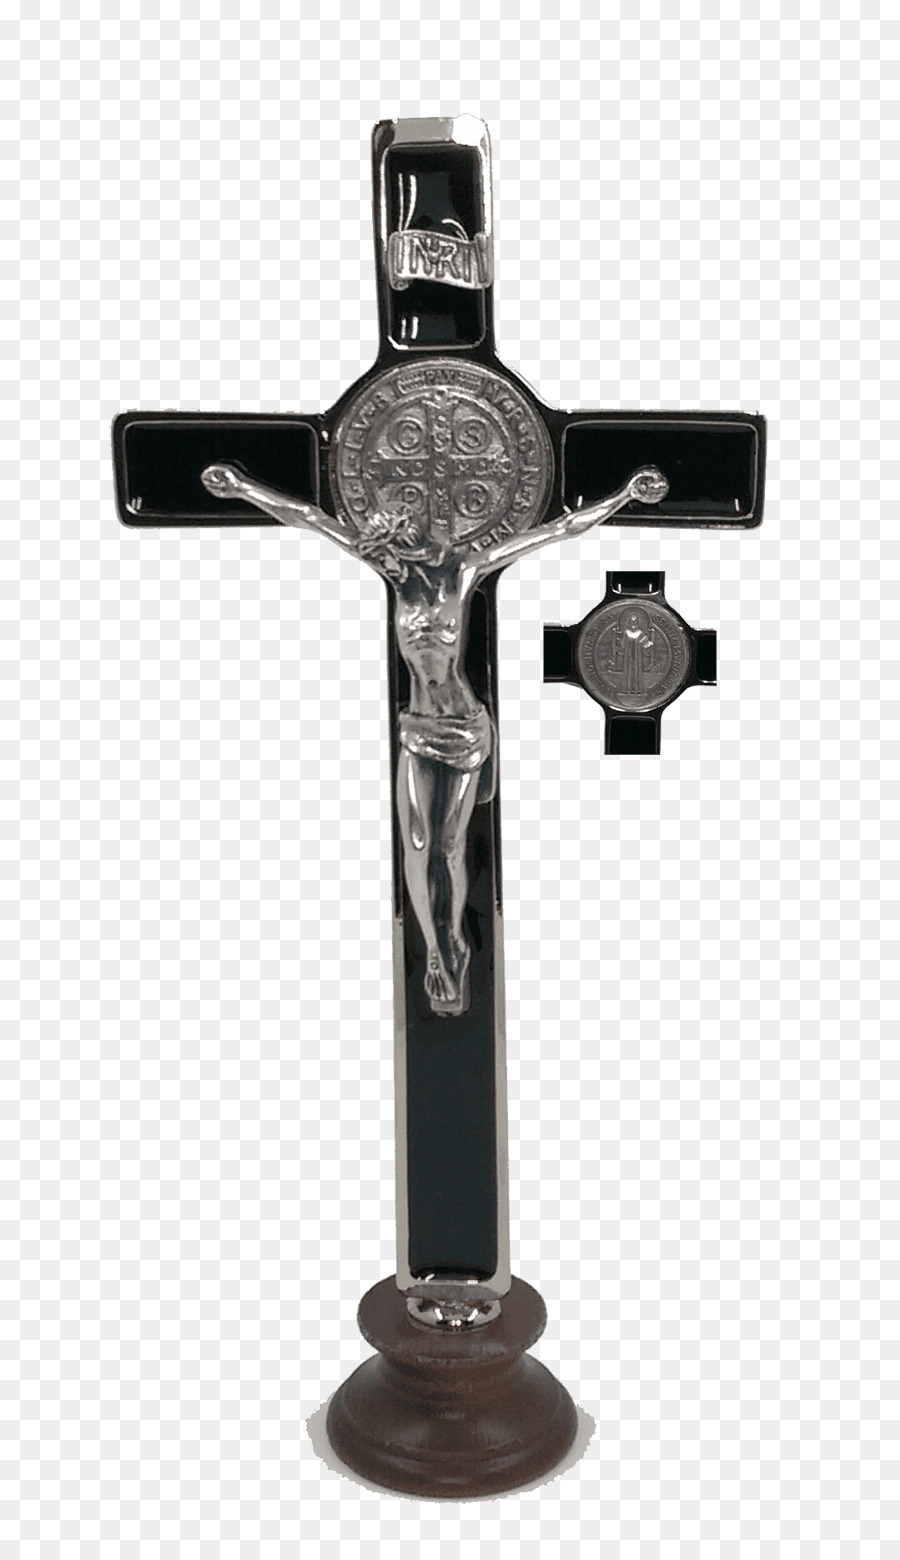 Crucifix -  png download - 900*1558 - Free Transparent Crucifix png Download.